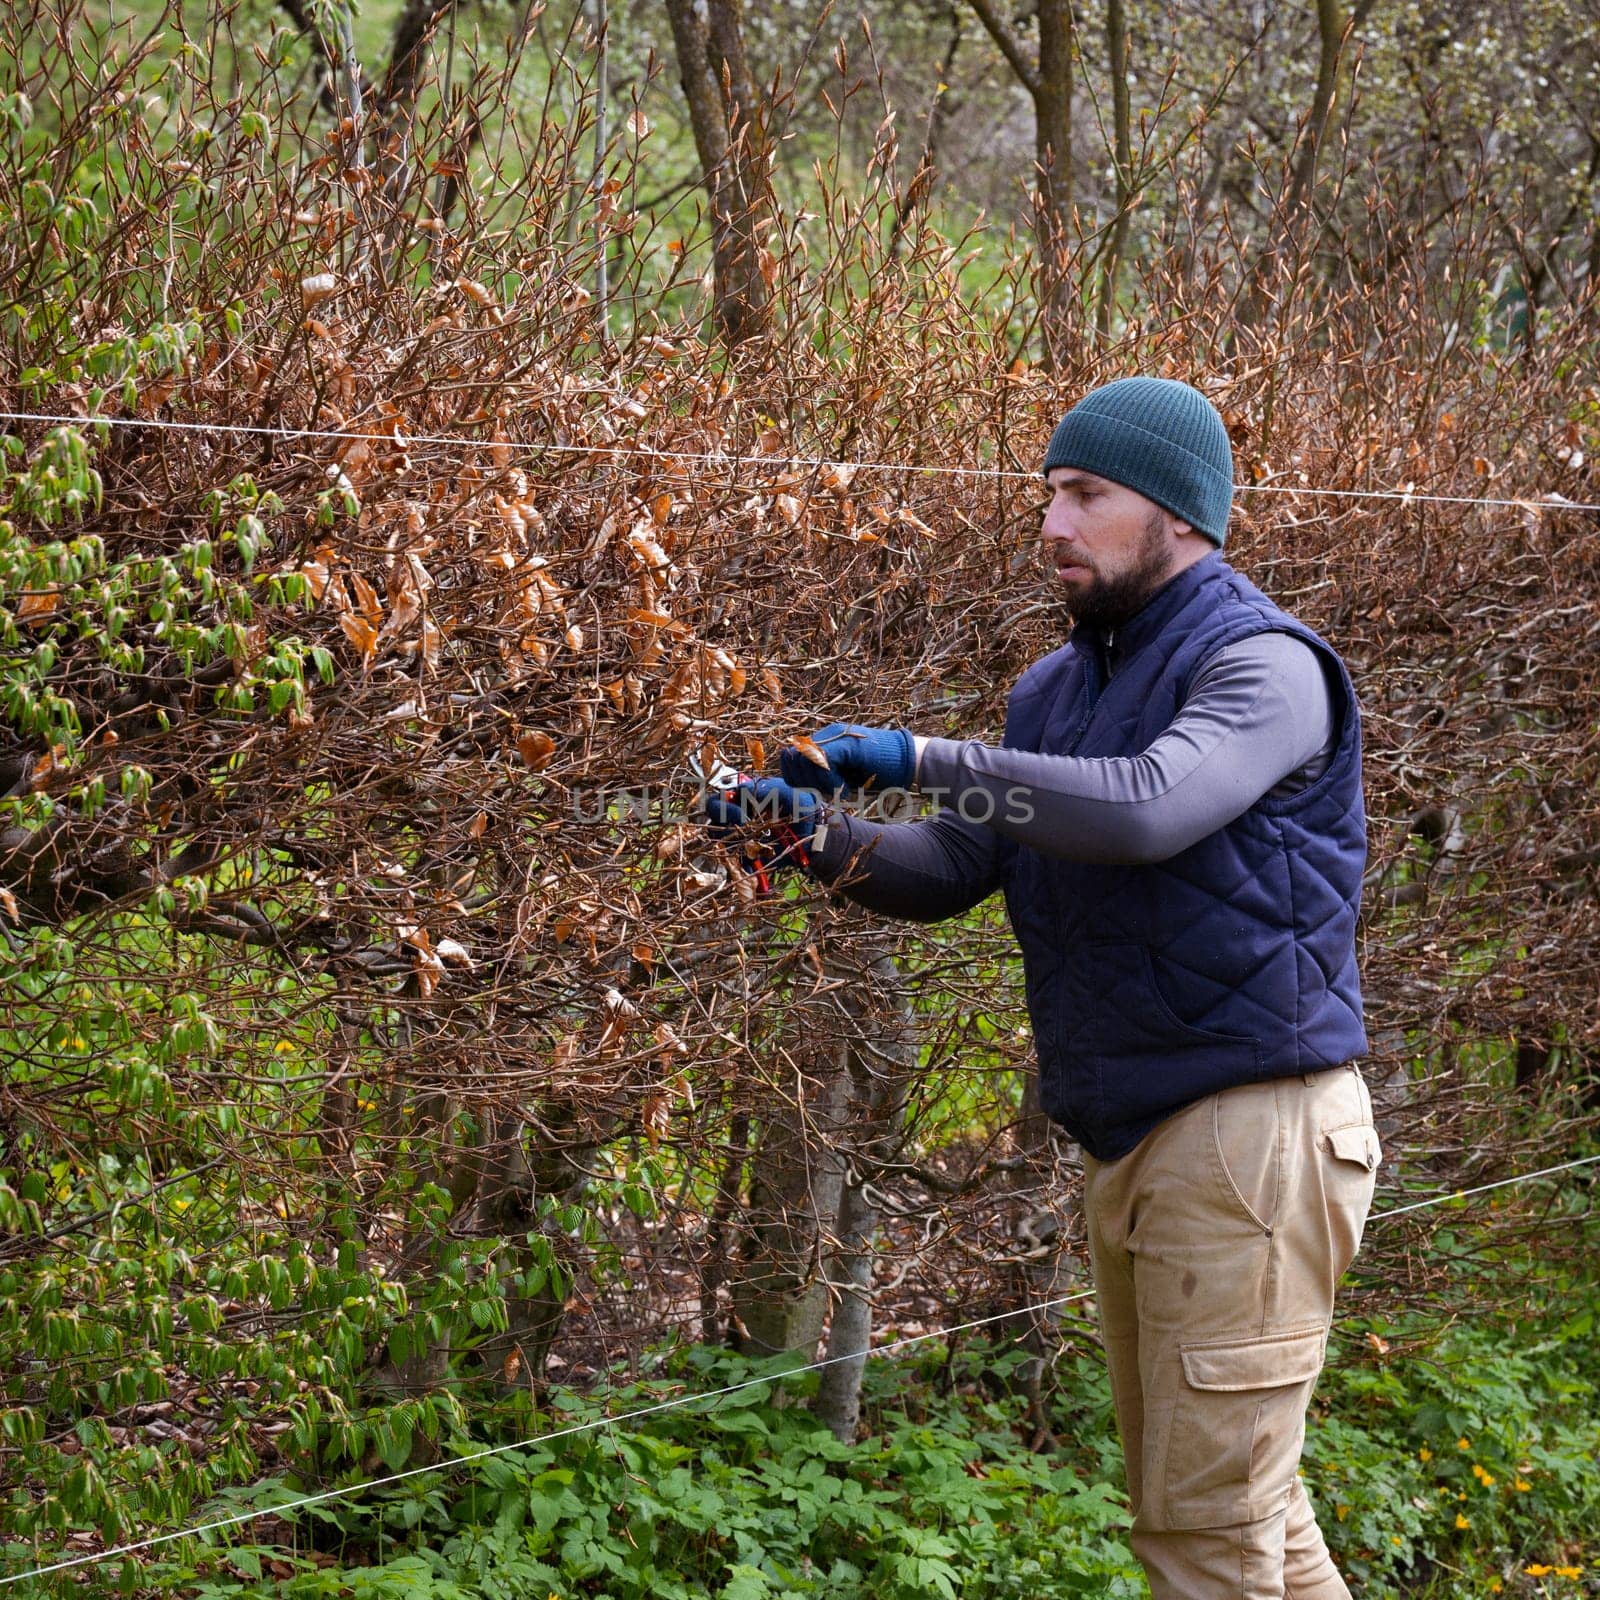 A man trims a hornbeam hedge in his garden, a gardener works with scissors.